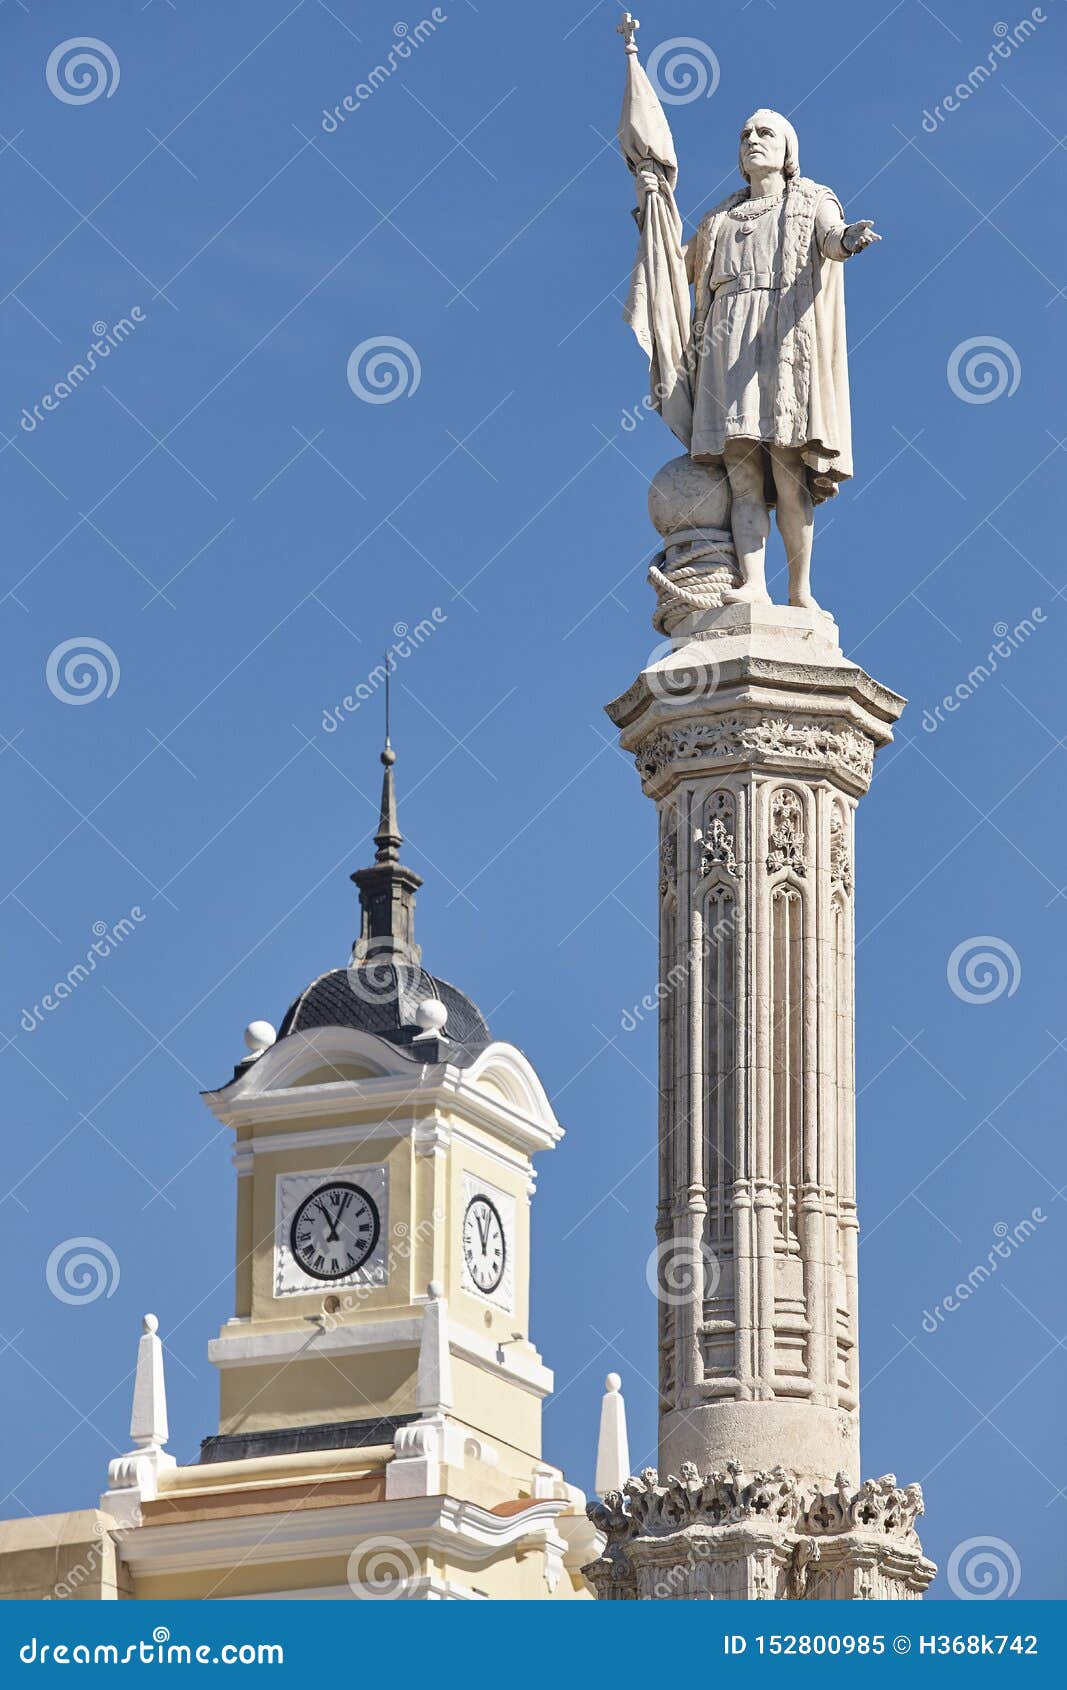 columbus statue monument in madrid city center. travel spain